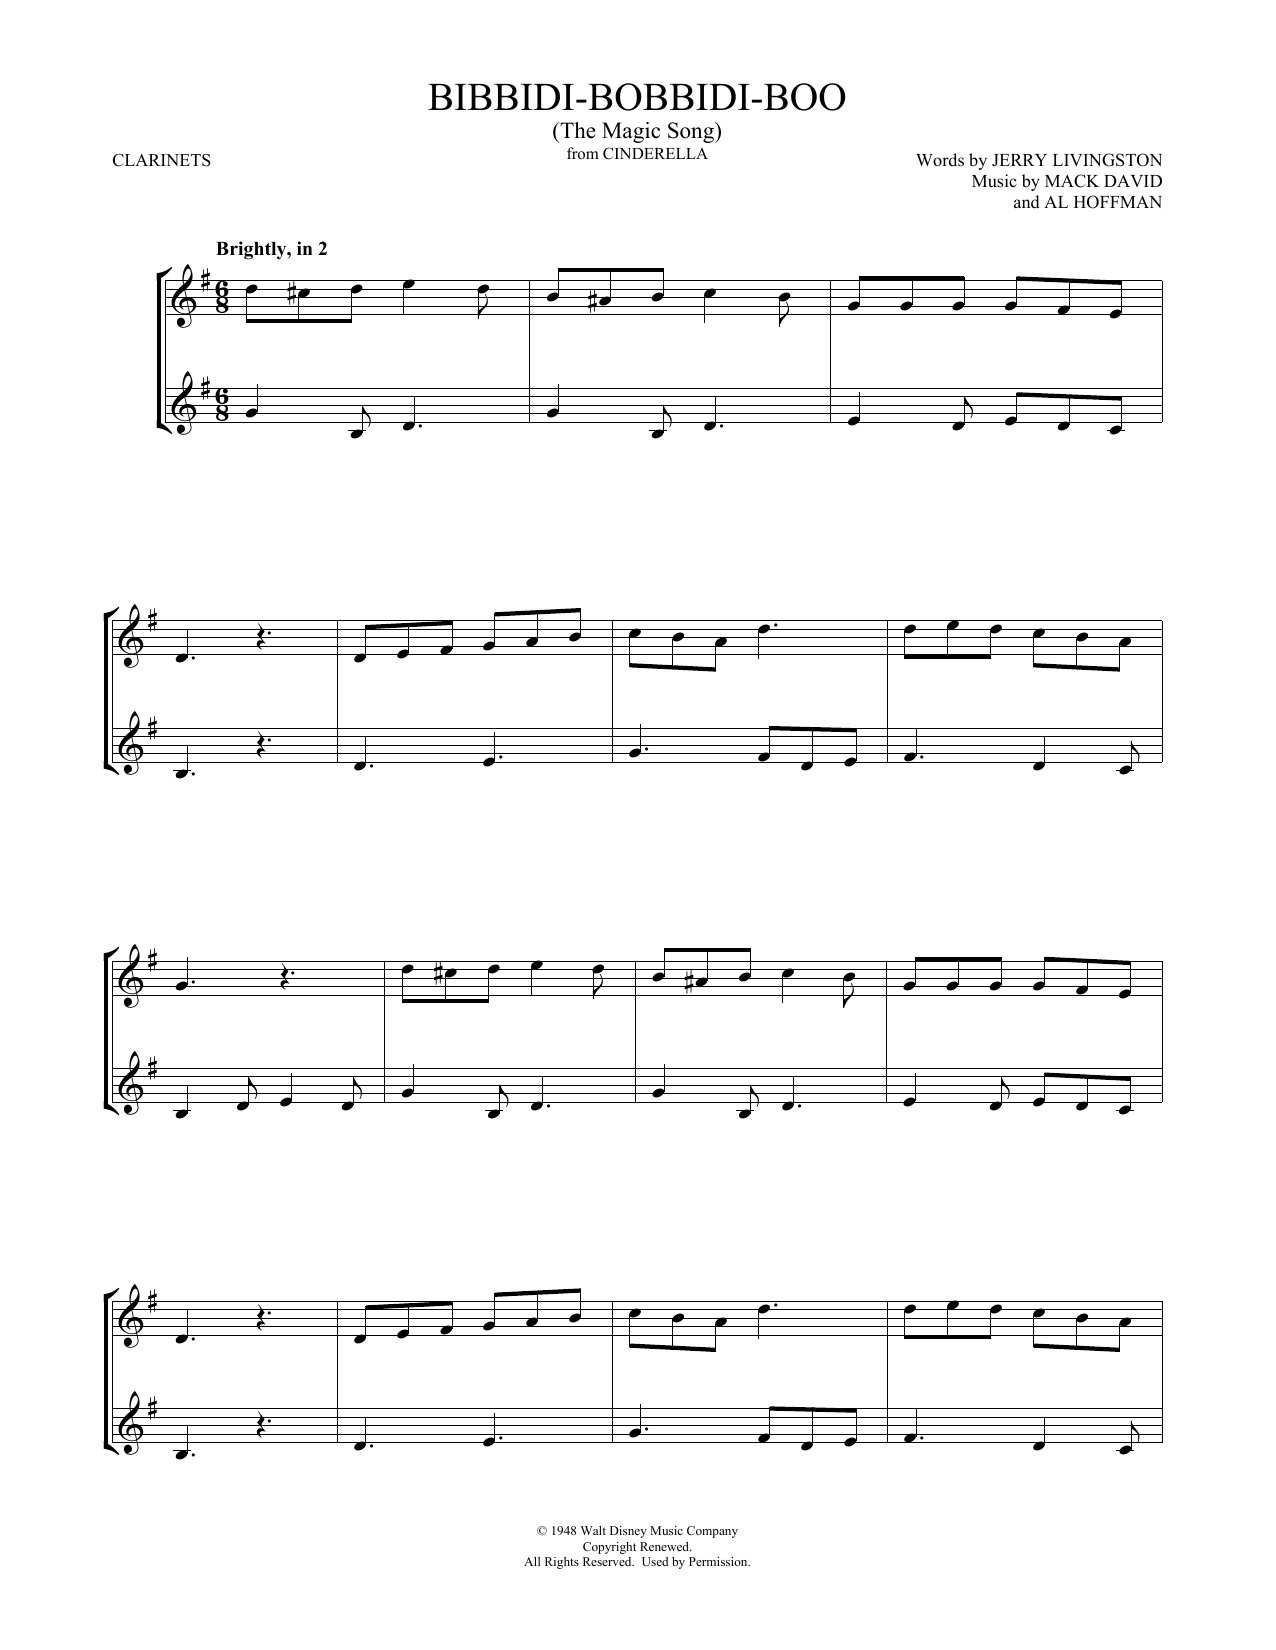 Verna Felton Bibbidi-Bobbidi-Boo (The Magic Song) (from Cinderella) Sheet Music Notes & Chords for Cello Duet - Download or Print PDF